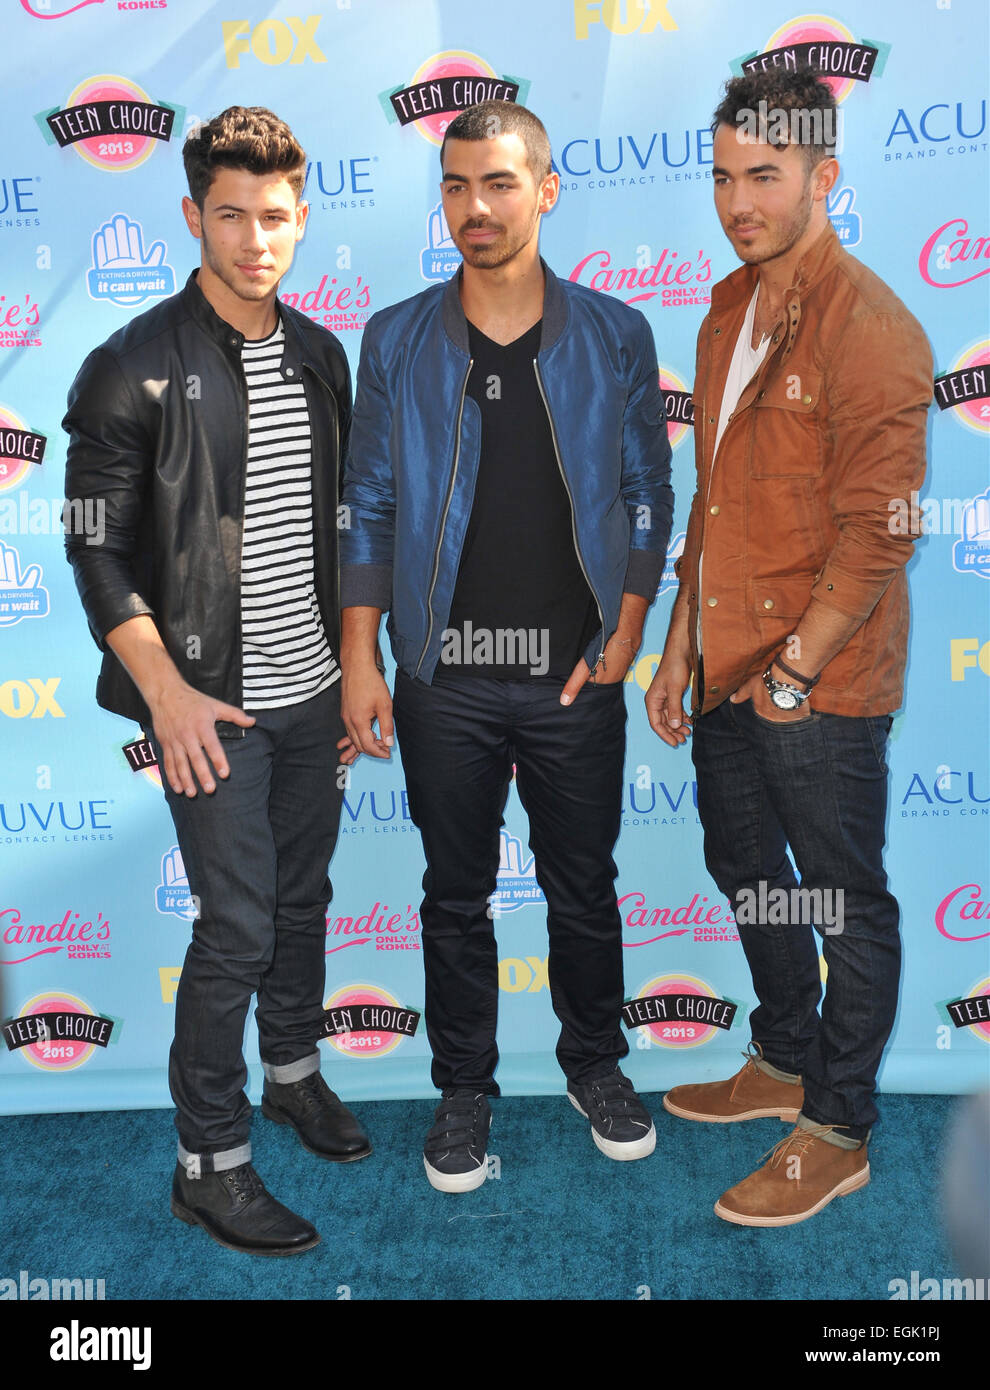 LOS ANGELES, CA - AUGUST 11, 2013: Jonas Brothers - Nick Jonas, Kevin Jonas & Joe Jonas - at the 2013 Teen Choice Awards at the Gibson Amphitheatre, Universal City, Hollywood. Stock Photo